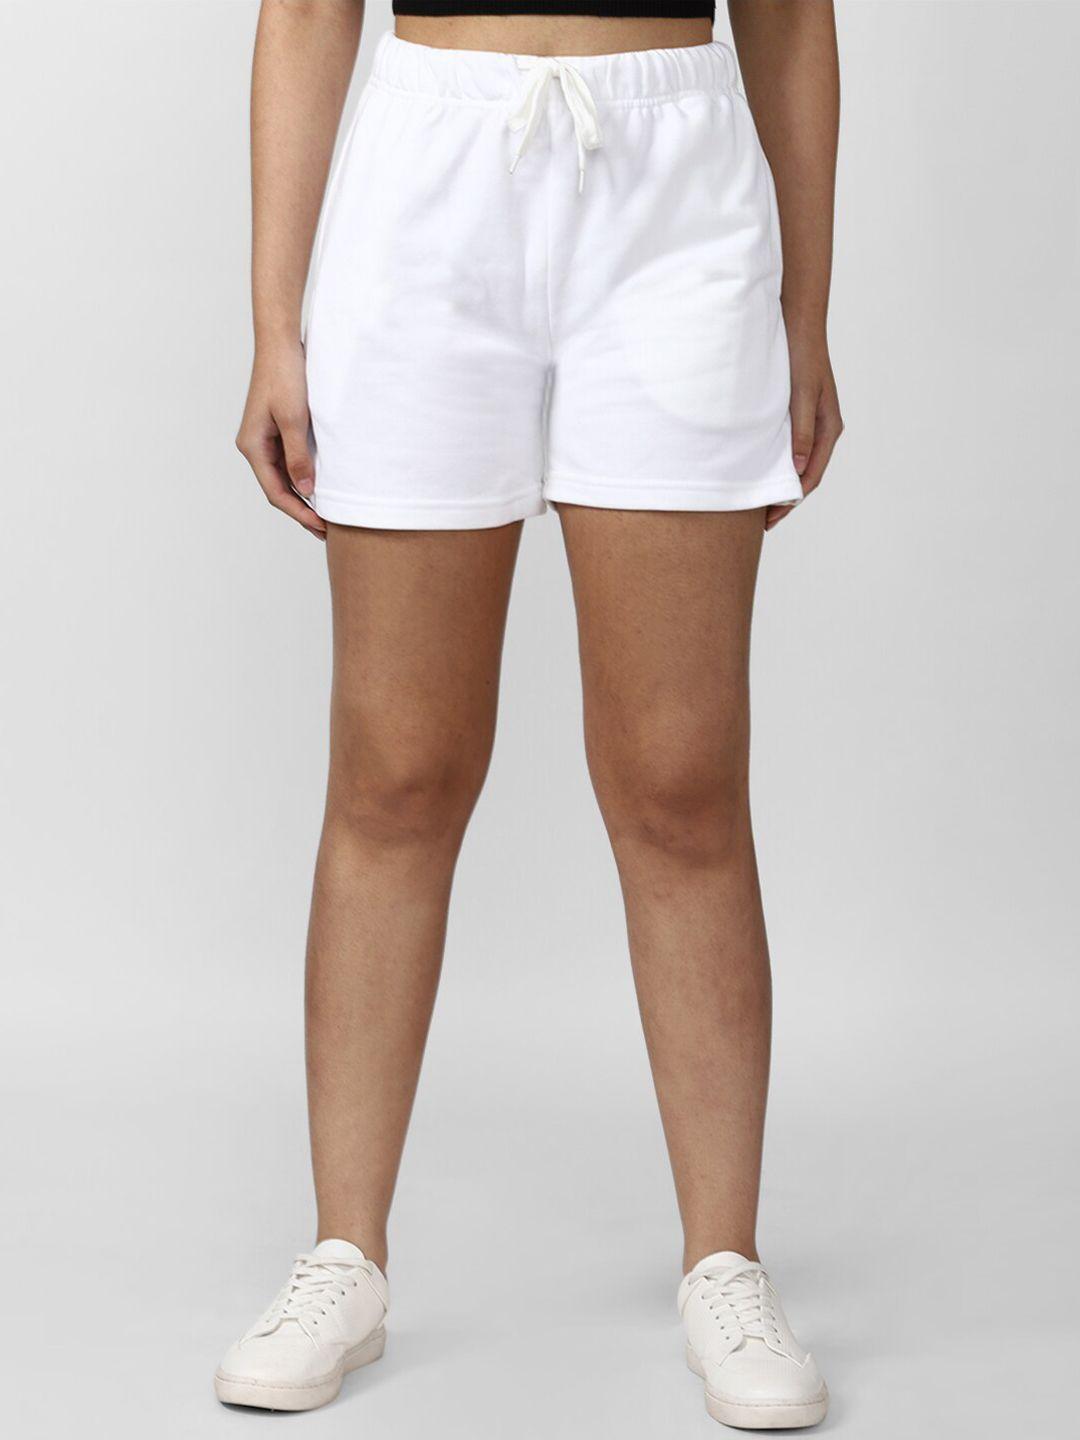 forever-21-women-white-solid-shorts